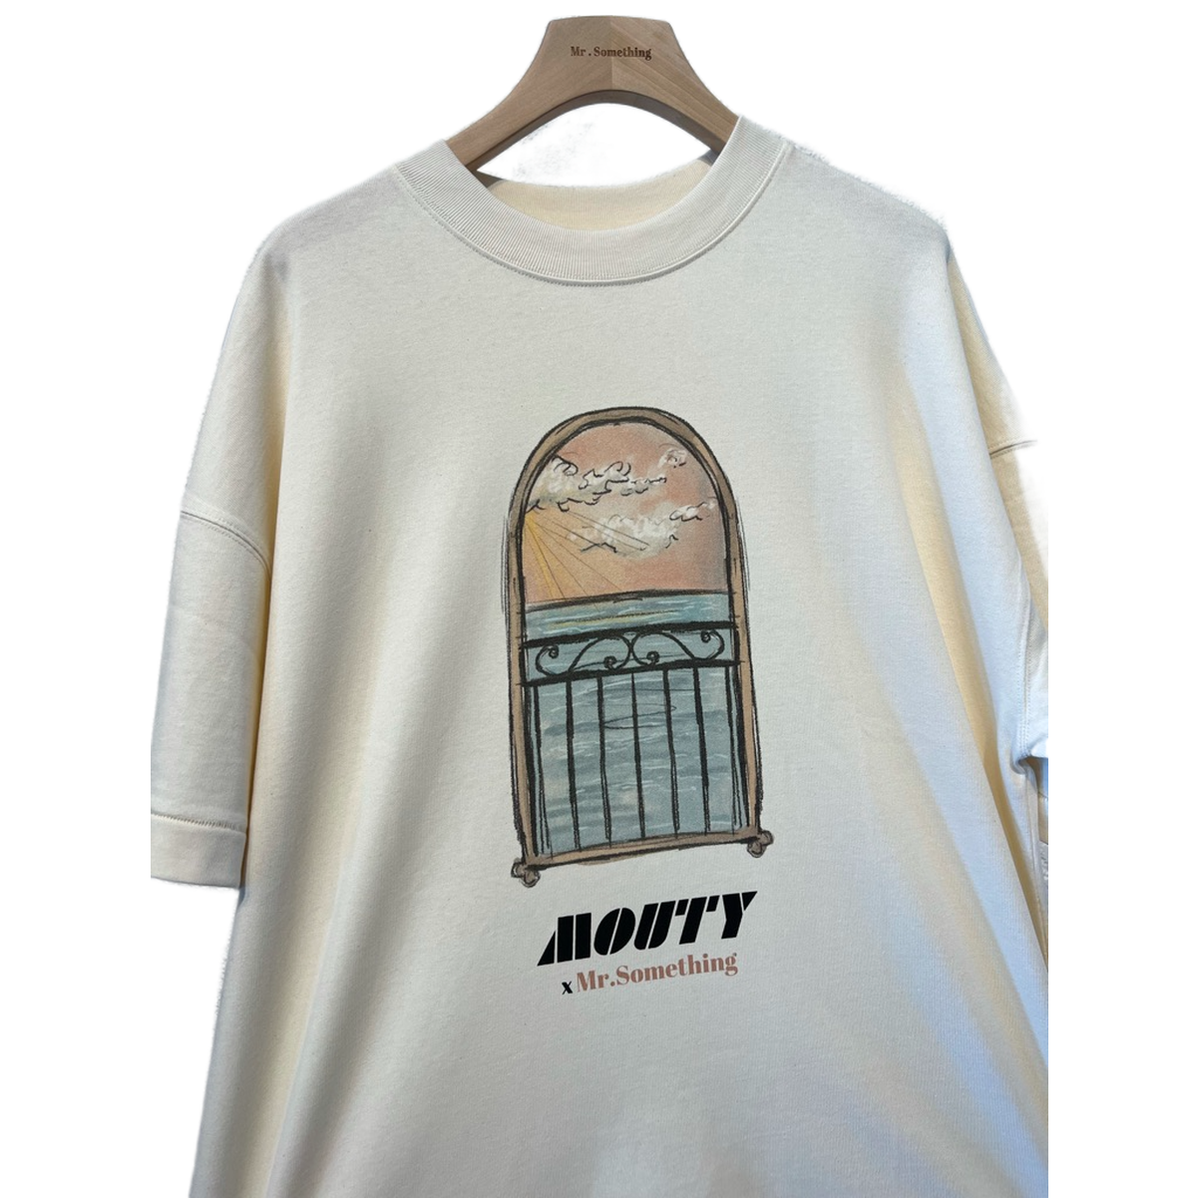 Mouty X Mr.something Window T-shirt